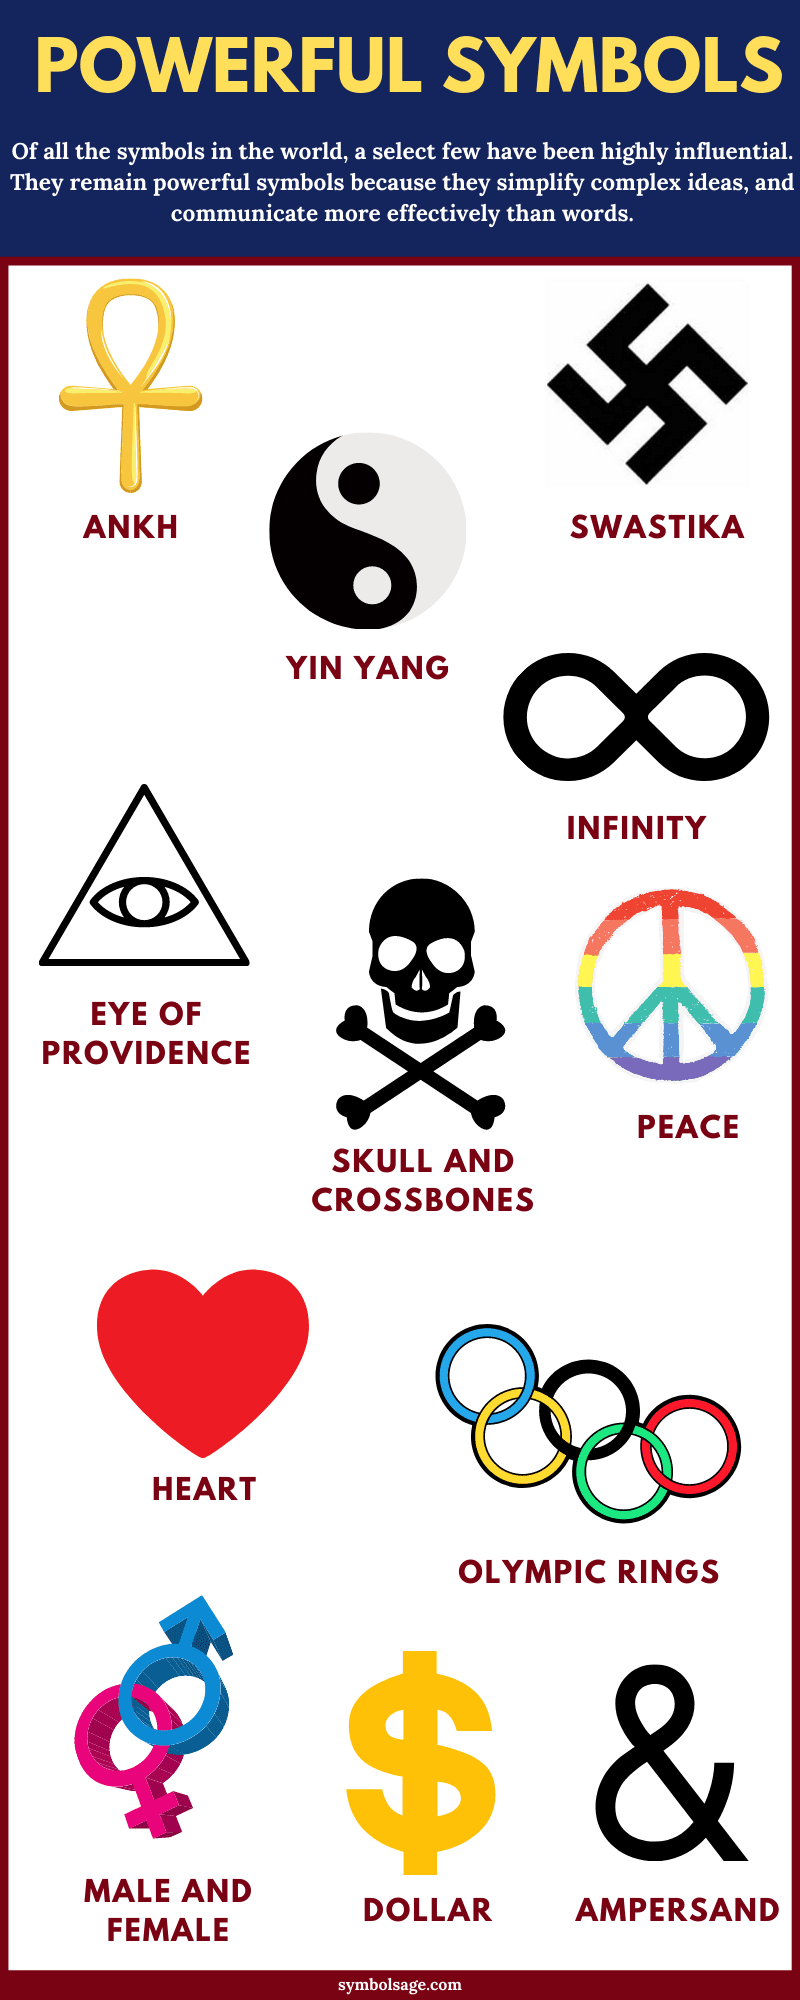 Powerful symbols